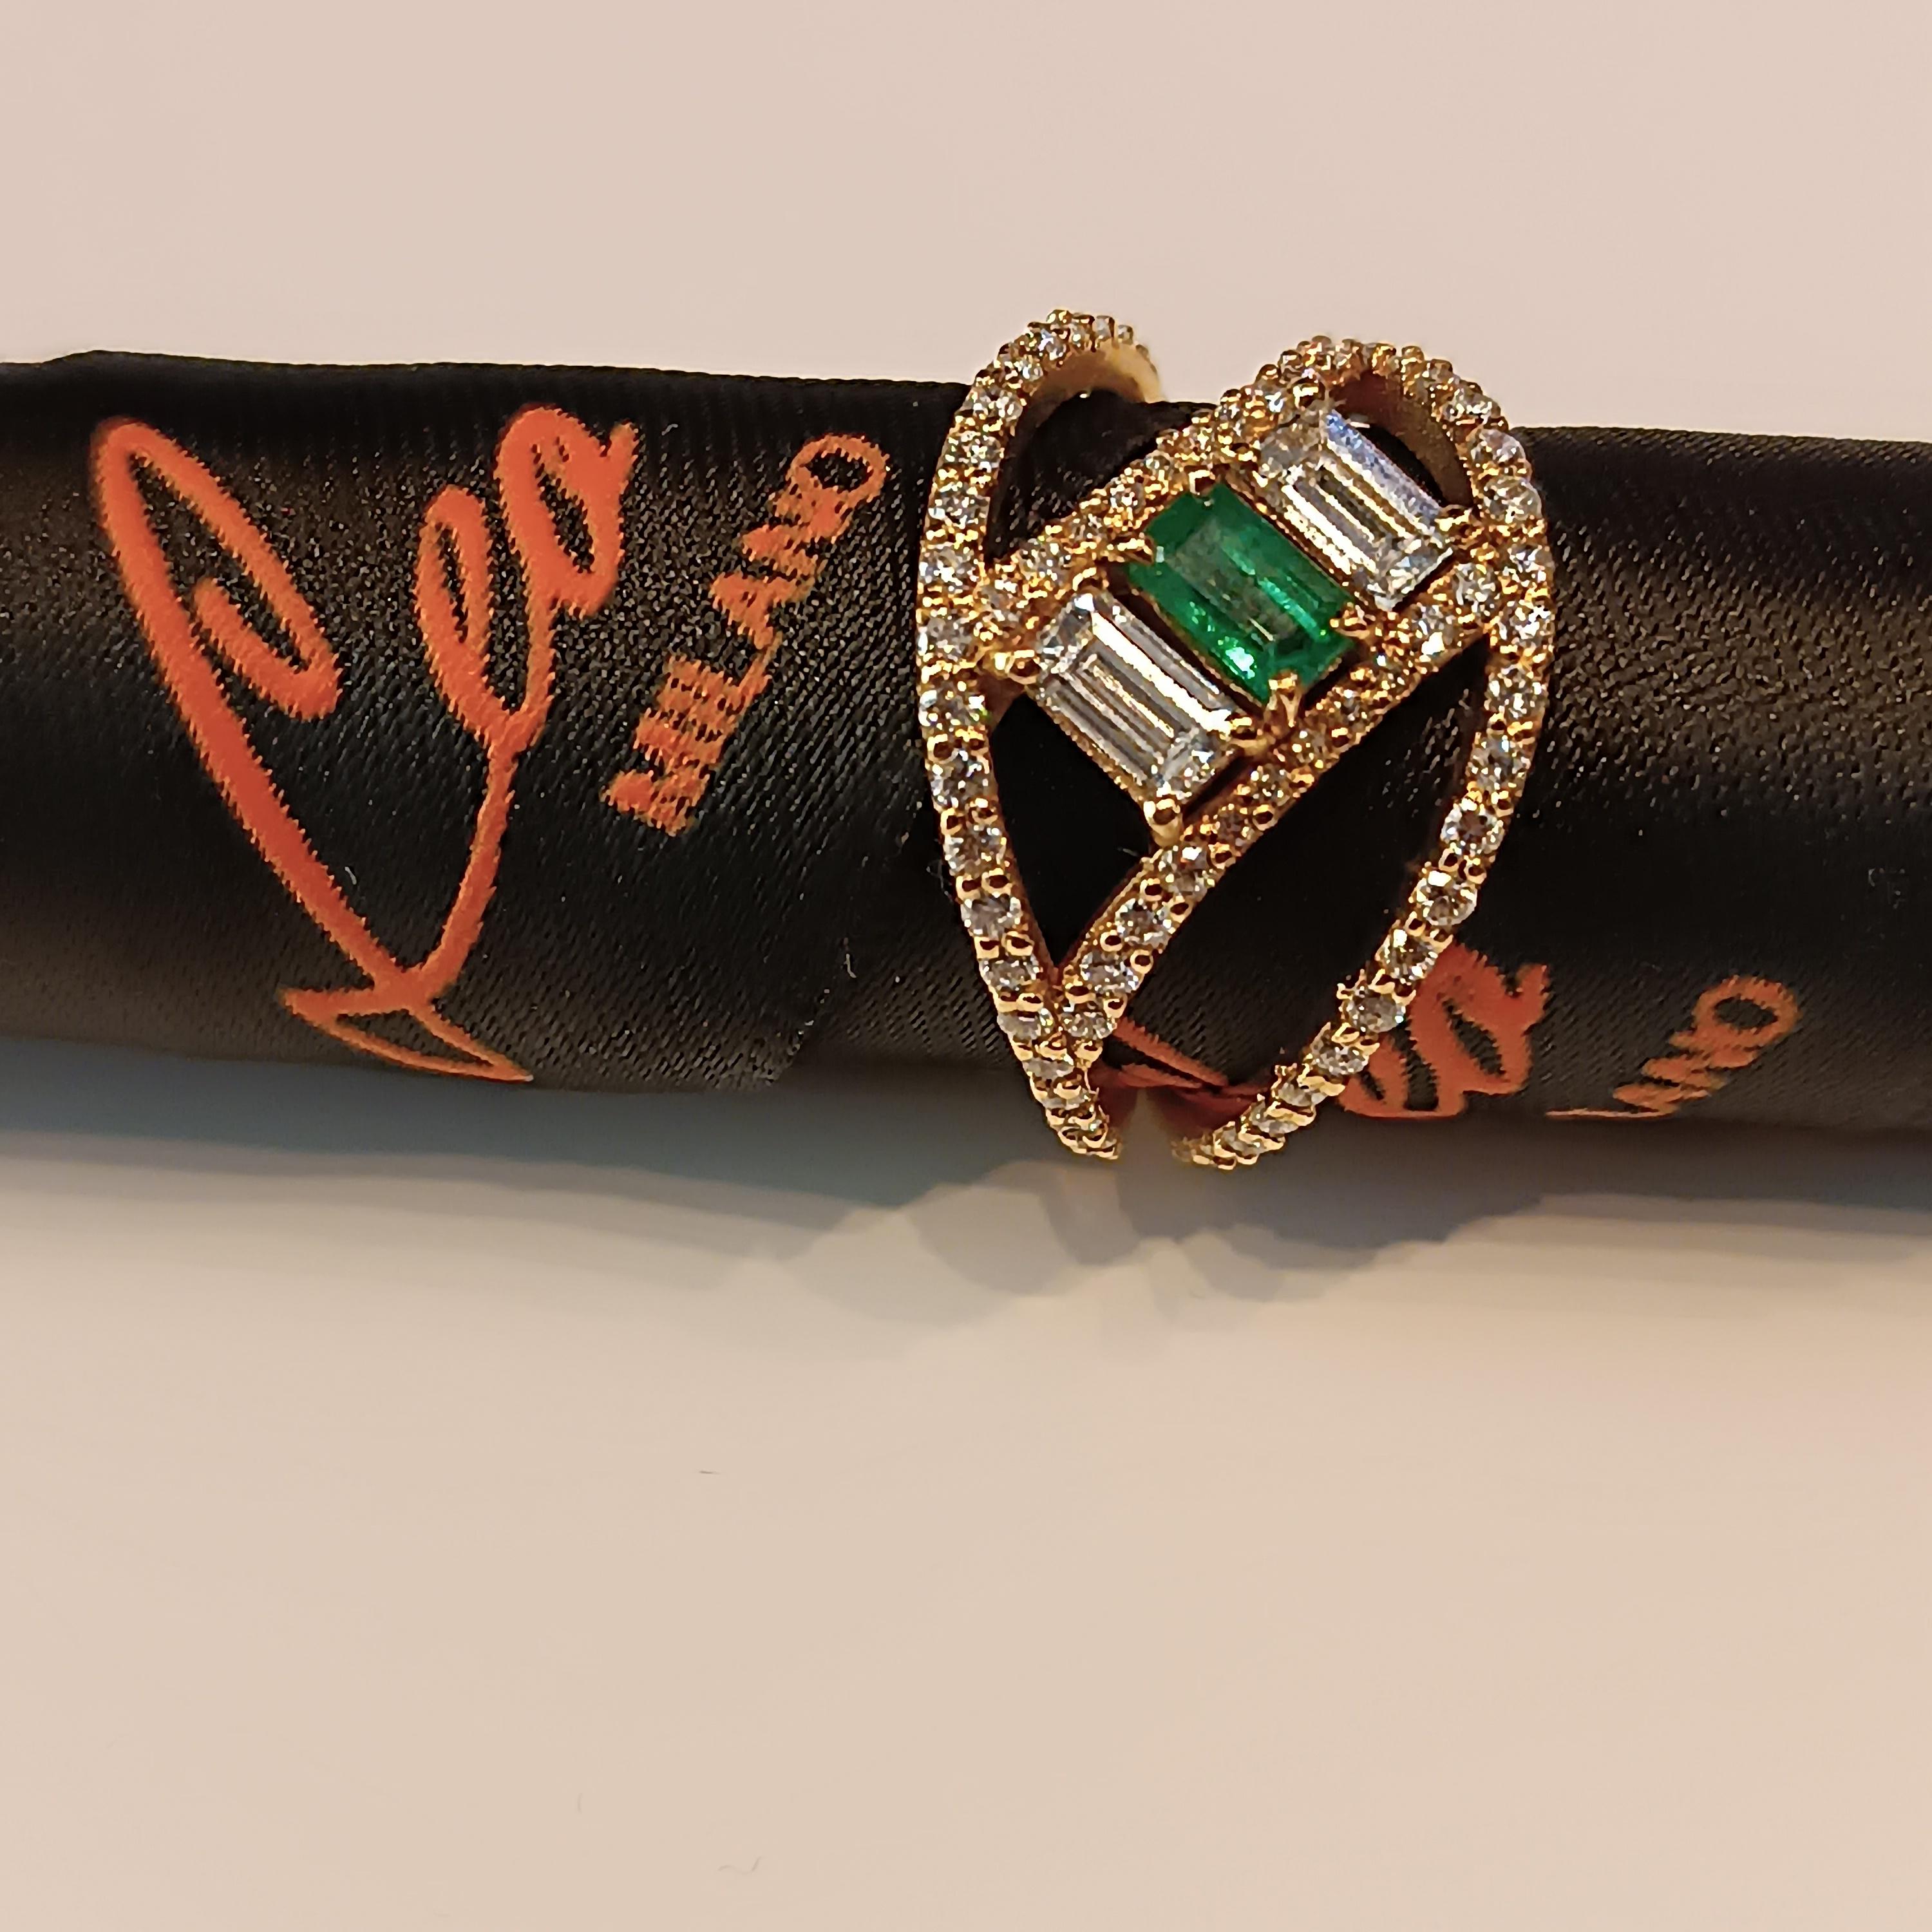 Baguette Cut Diamond and Emerald Ring in Rose Gold 118 Carat Diamonds 0.3 Carat Emerald For Sale